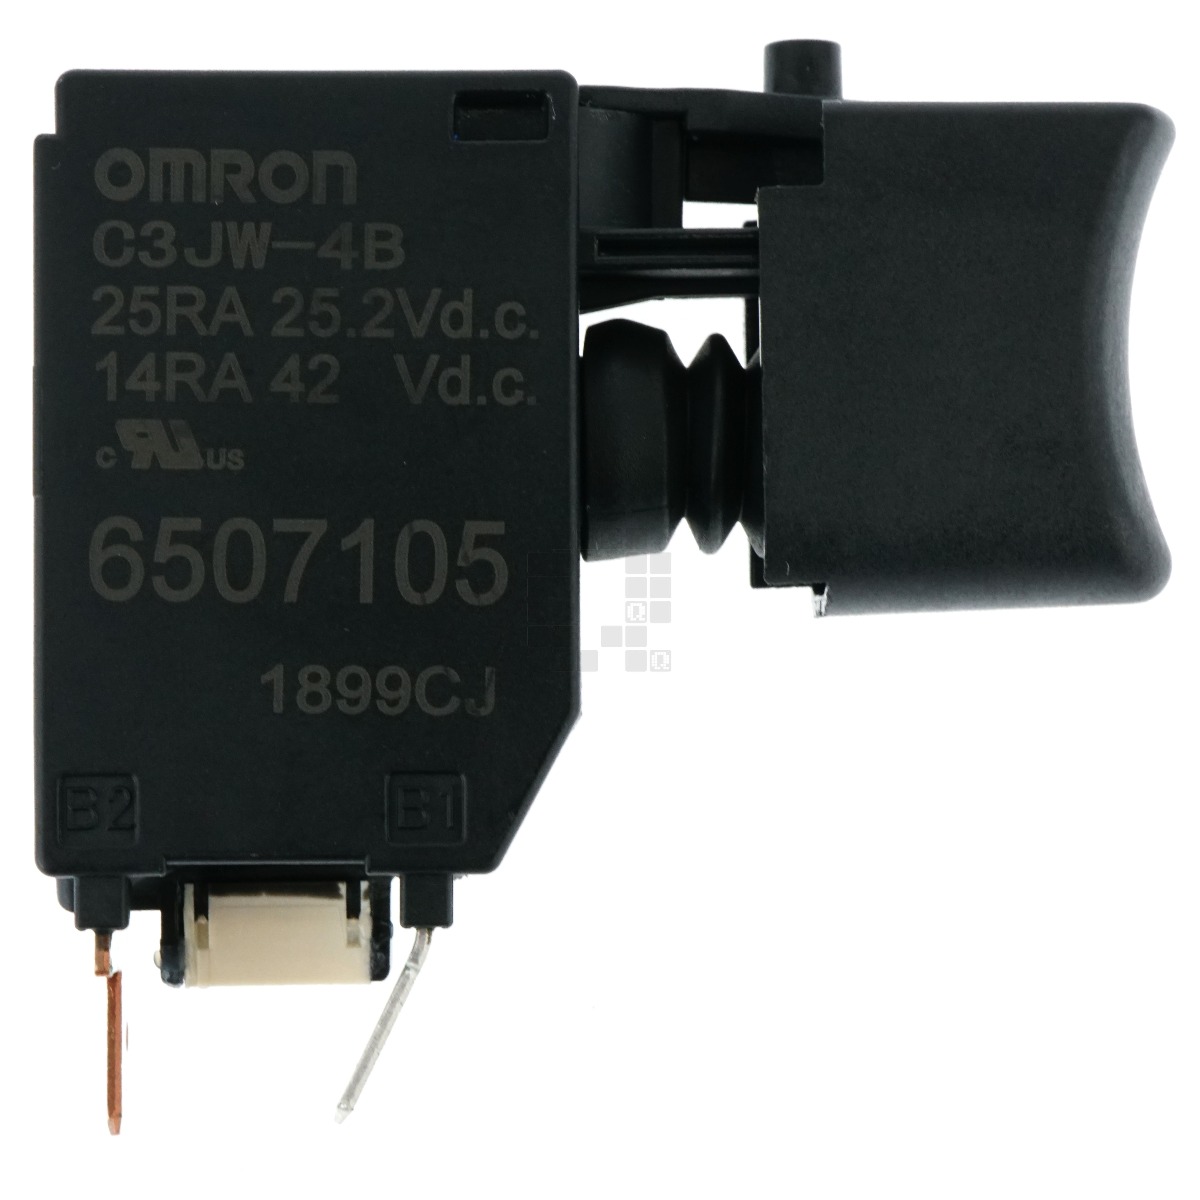 Makita 650710-5 Trigger Switch, Omron C3JW-4B, XPH06